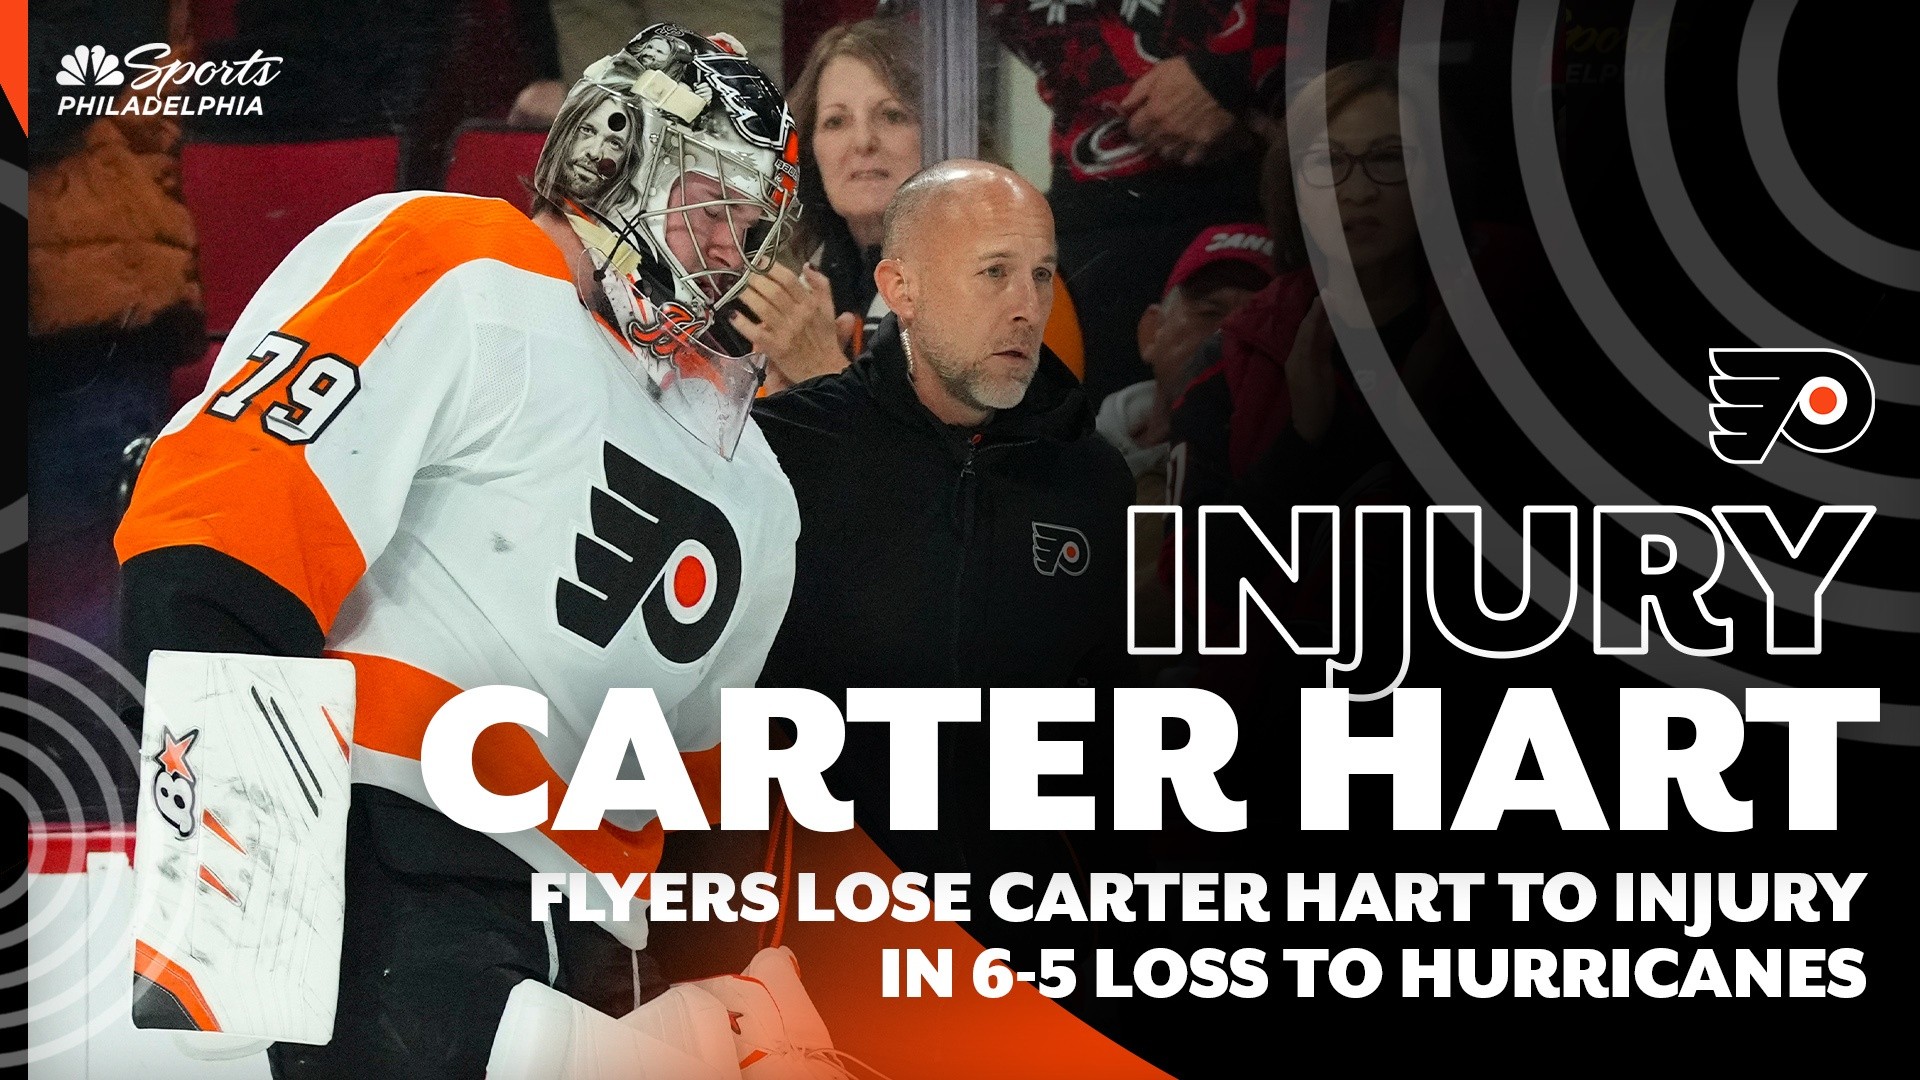 Carter hart HD wallpapers